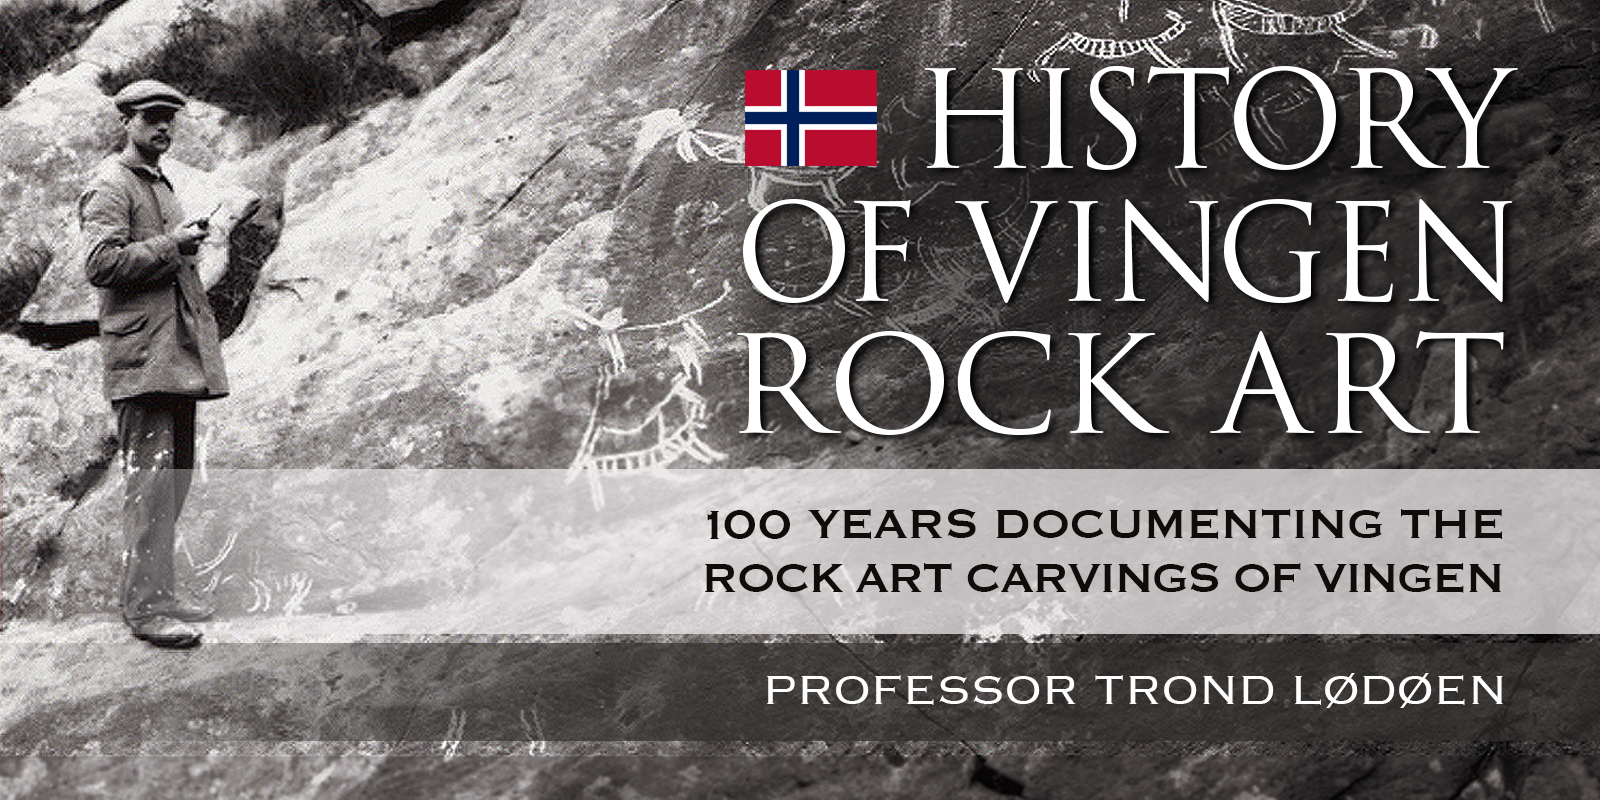 History of Vingen Rock Art in Norway Petroglyphs Archaeology